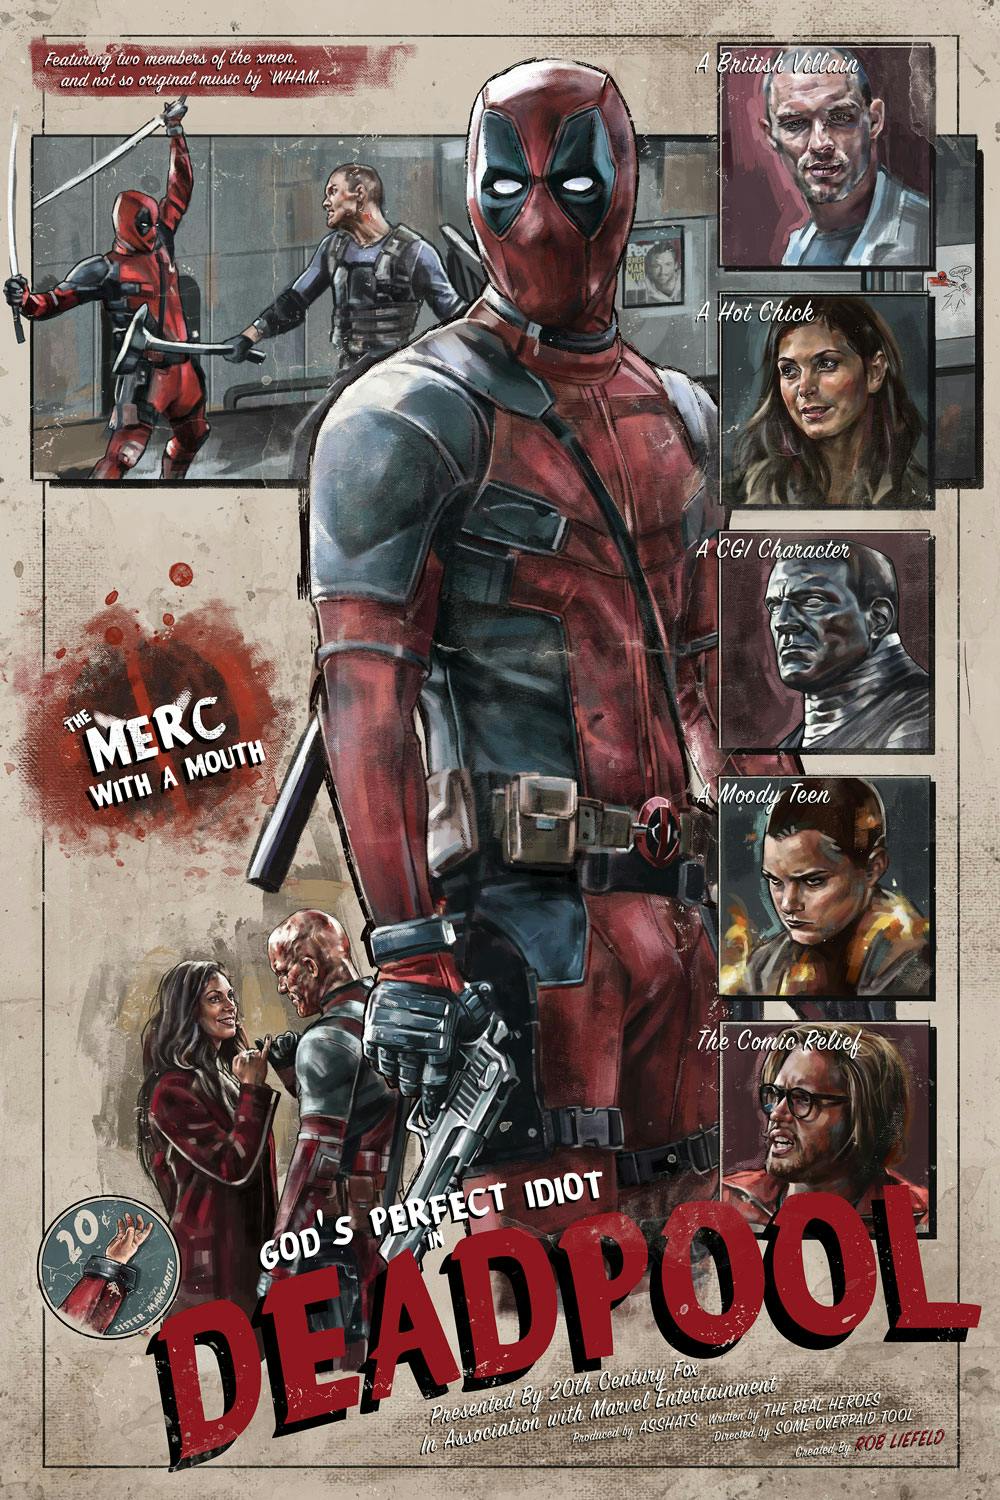 Original artwork for "Deadpool" created by Celebrity Fan Fest guest Robert Bruno